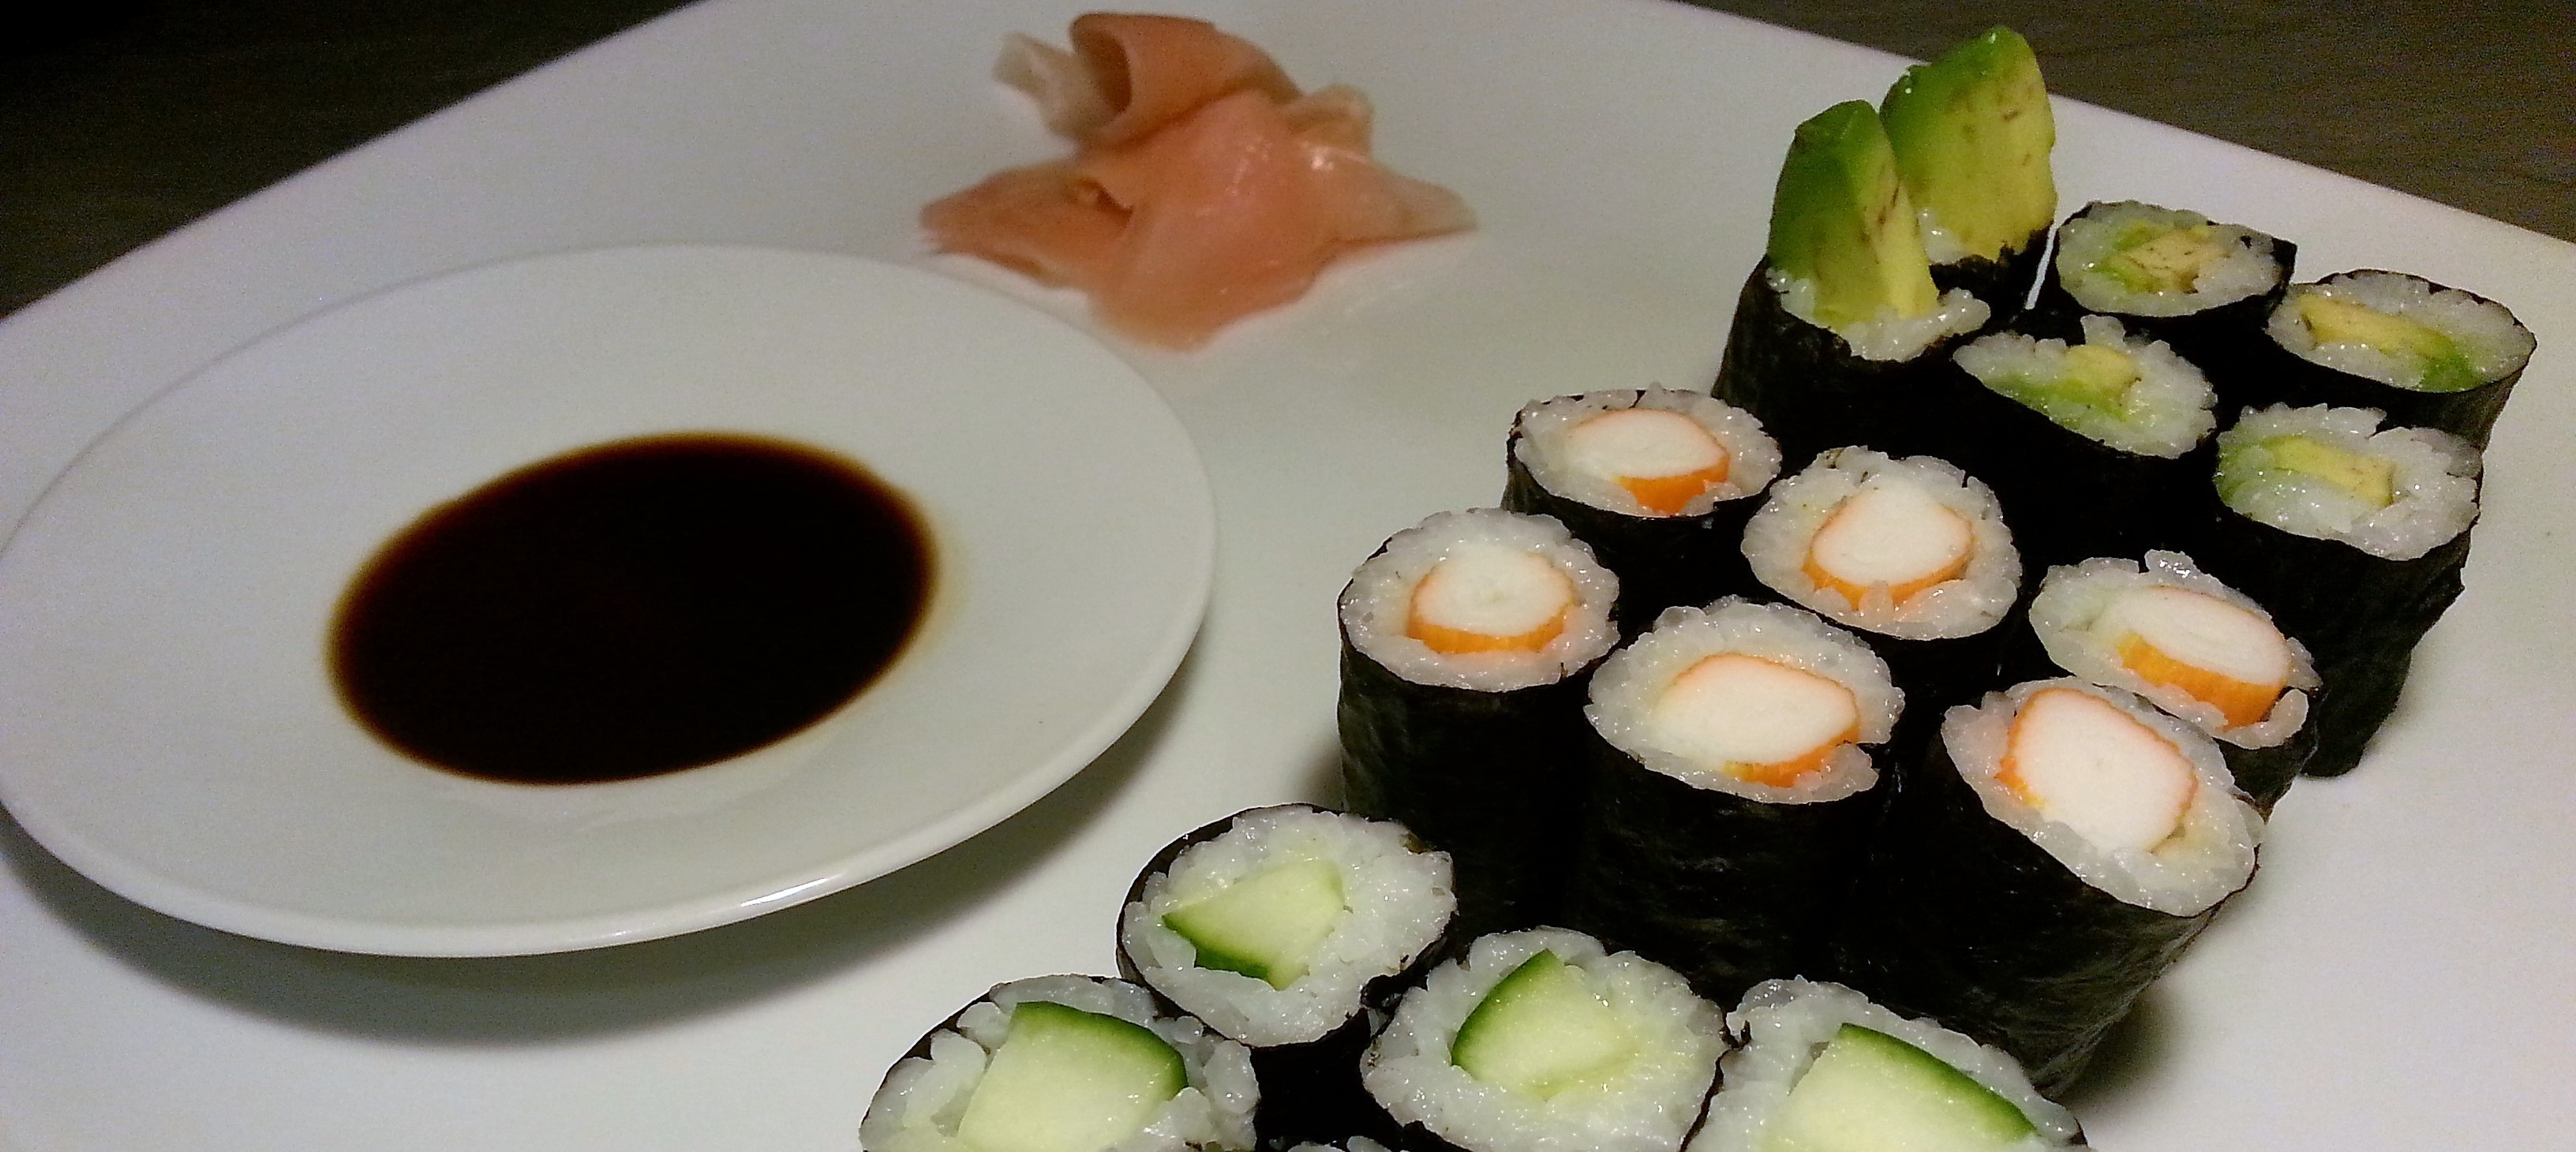 Hoso-Maki Sushi mit Avocado, Gurke und Surimi - Sushi-Liebhaber